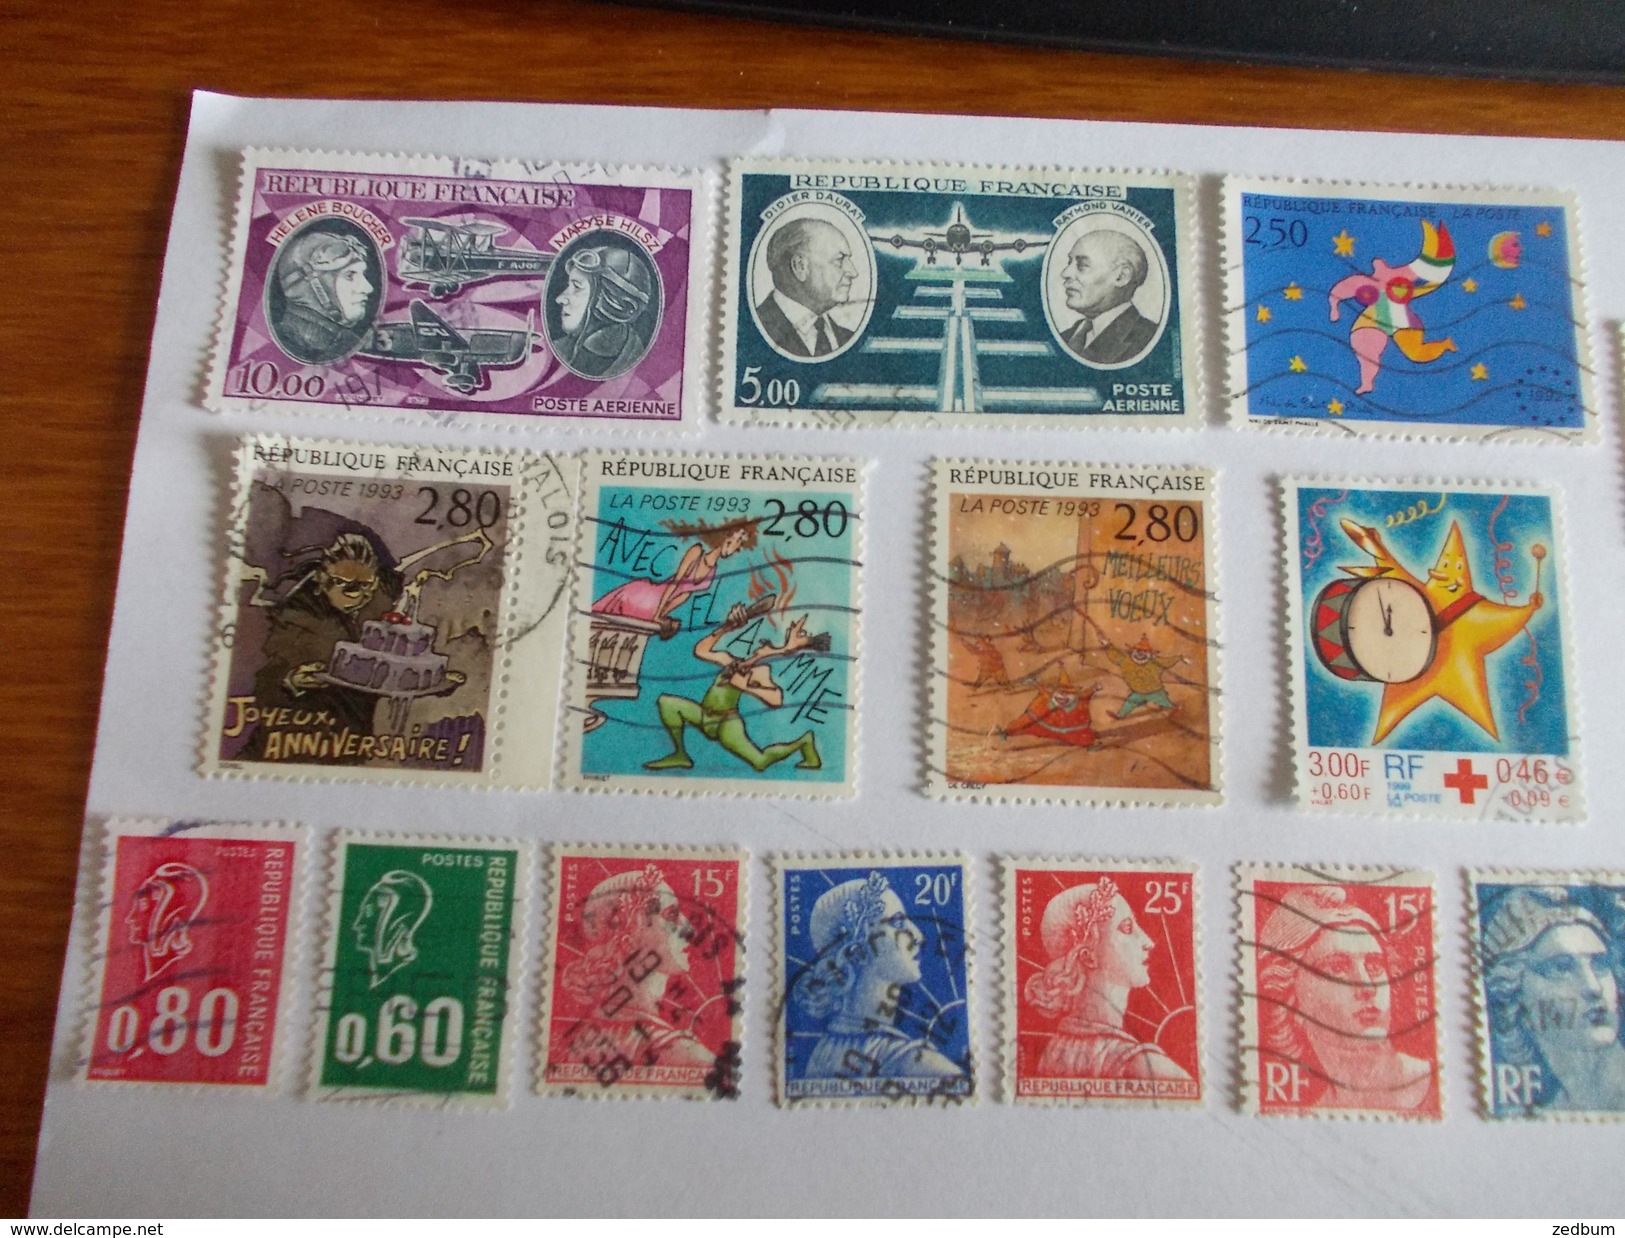 TIMBRE France Lot De 30 Timbres à Identifier N° 504 - Lots & Kiloware (mixtures) - Max. 999 Stamps